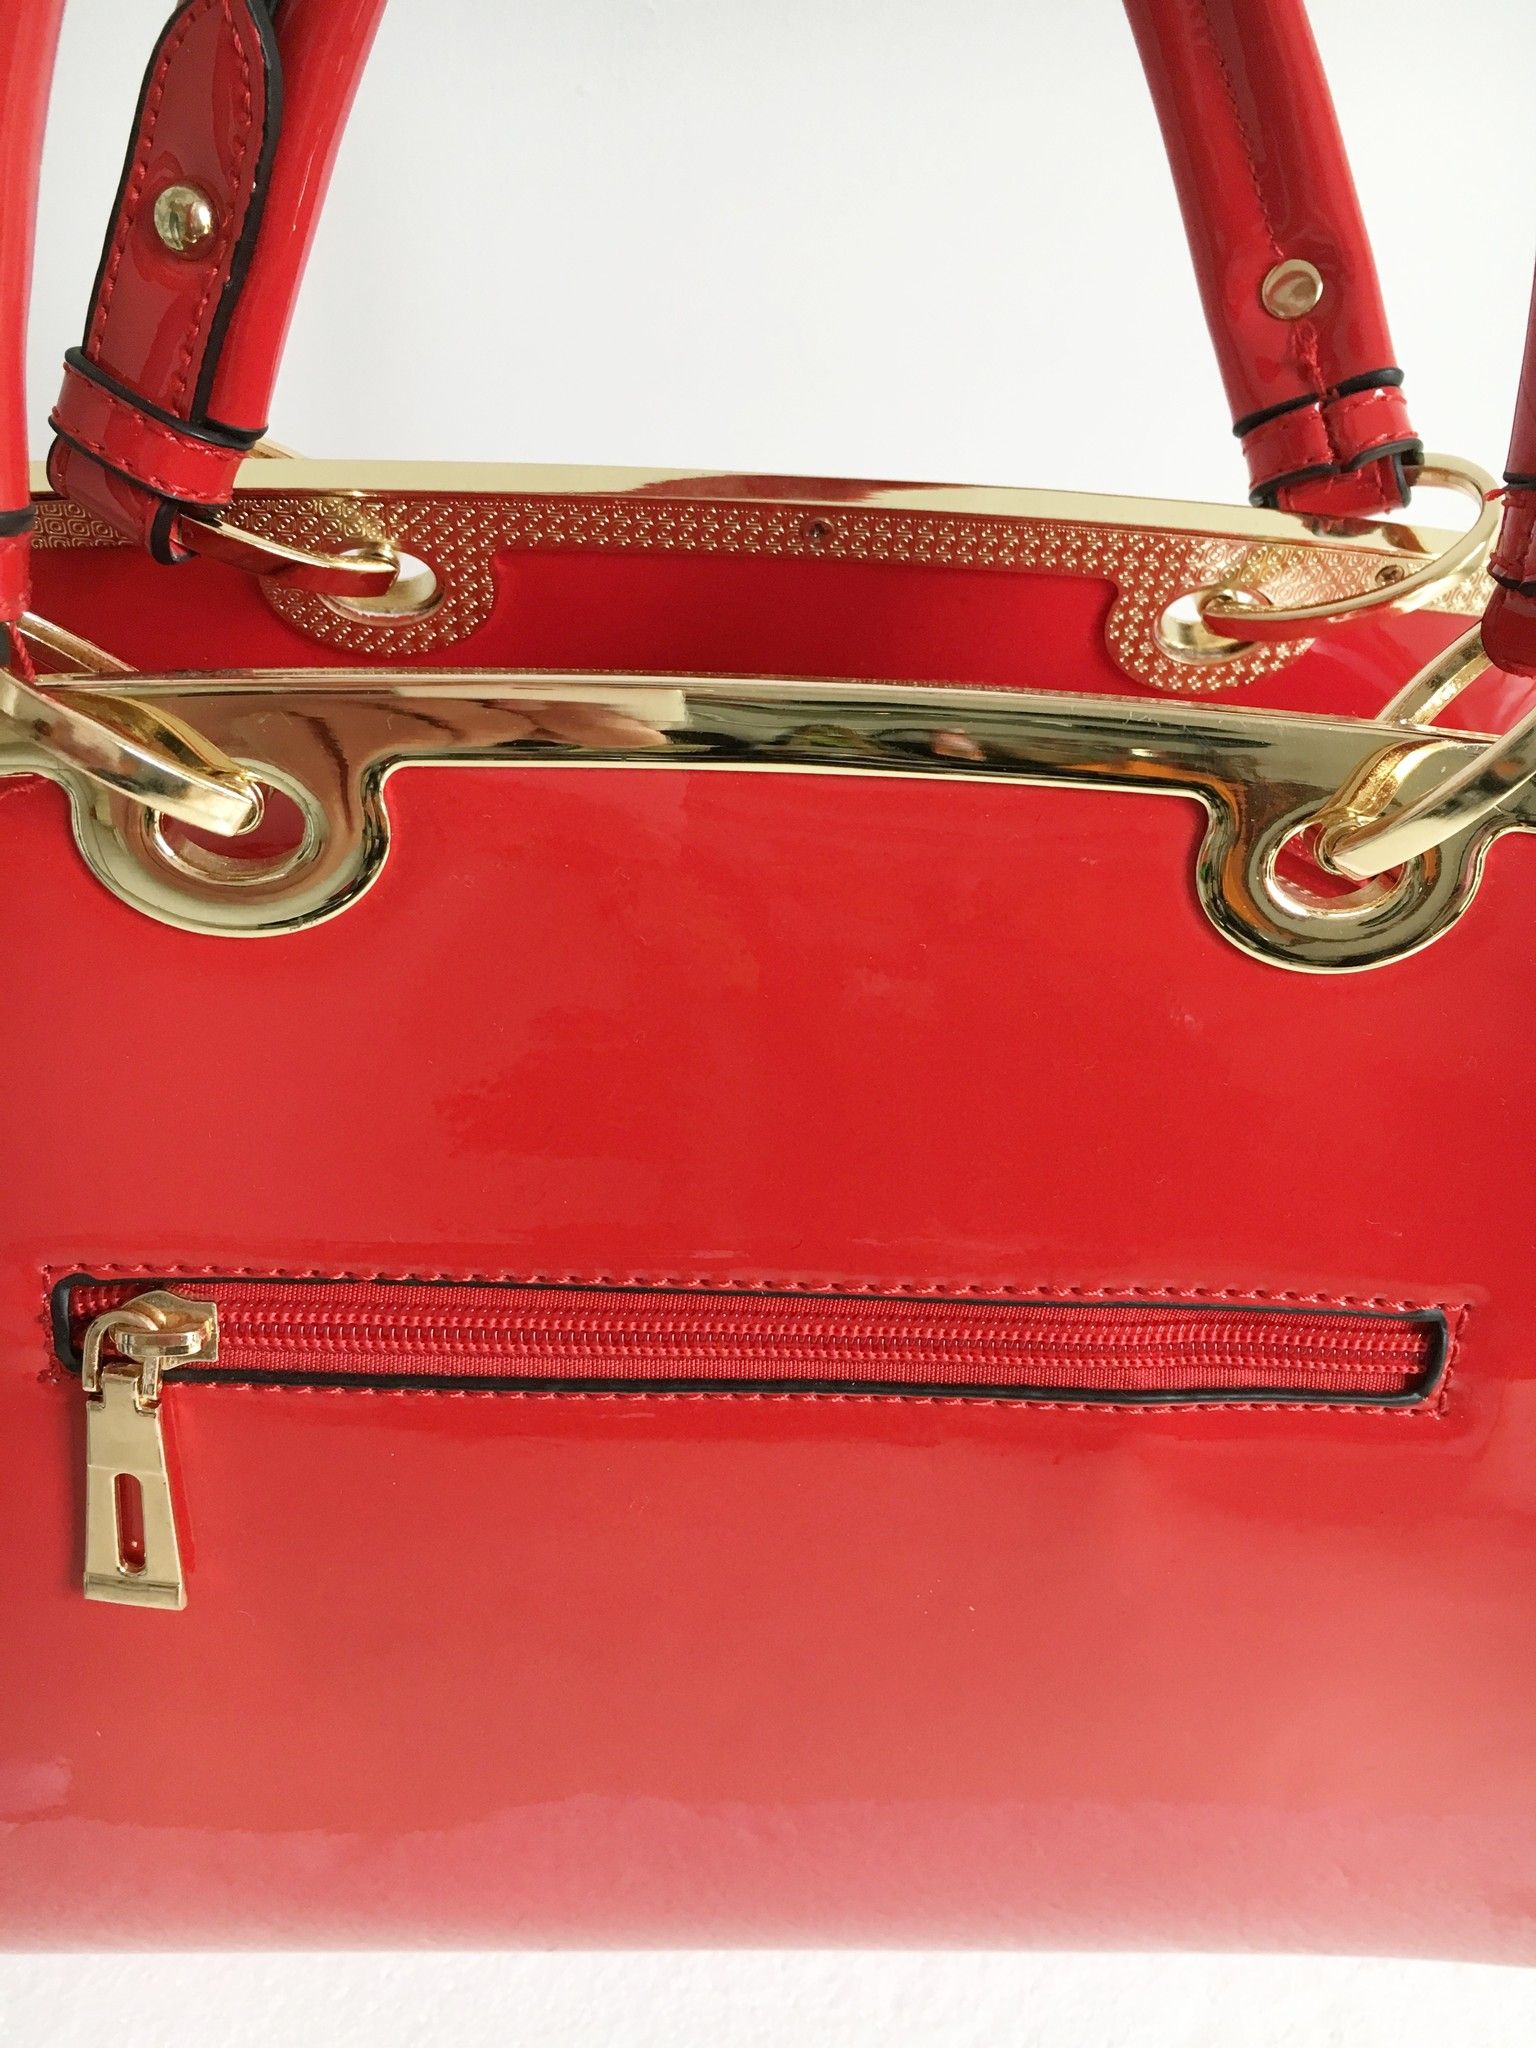 Patent leather handbag with gold trim Cod.1024